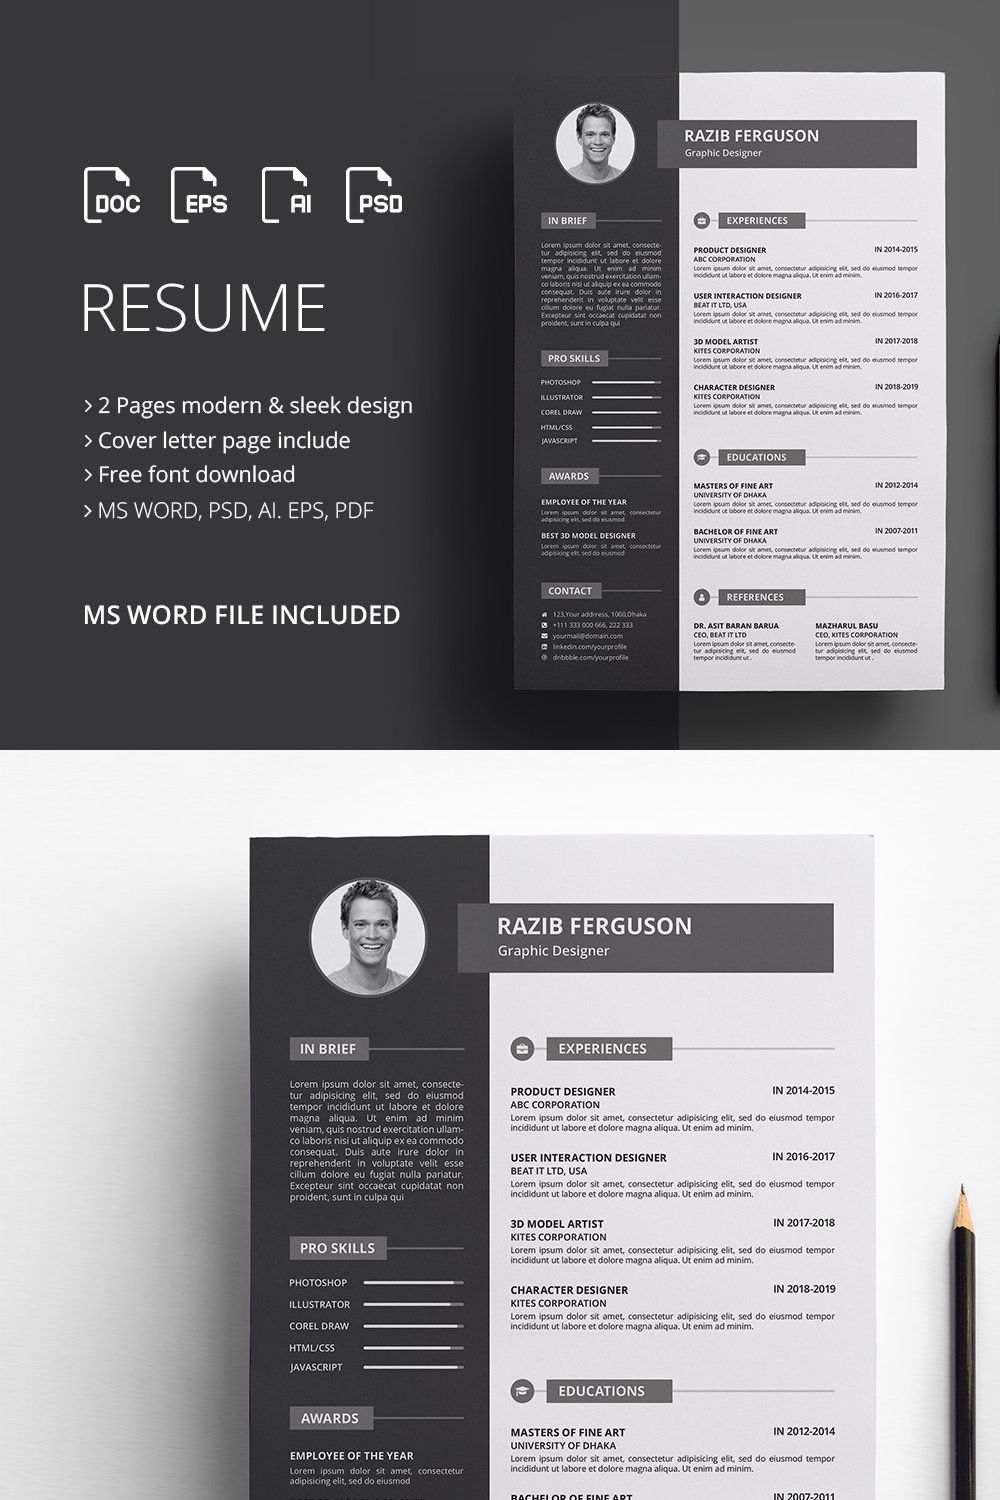 Resume / CV pinterest preview image.